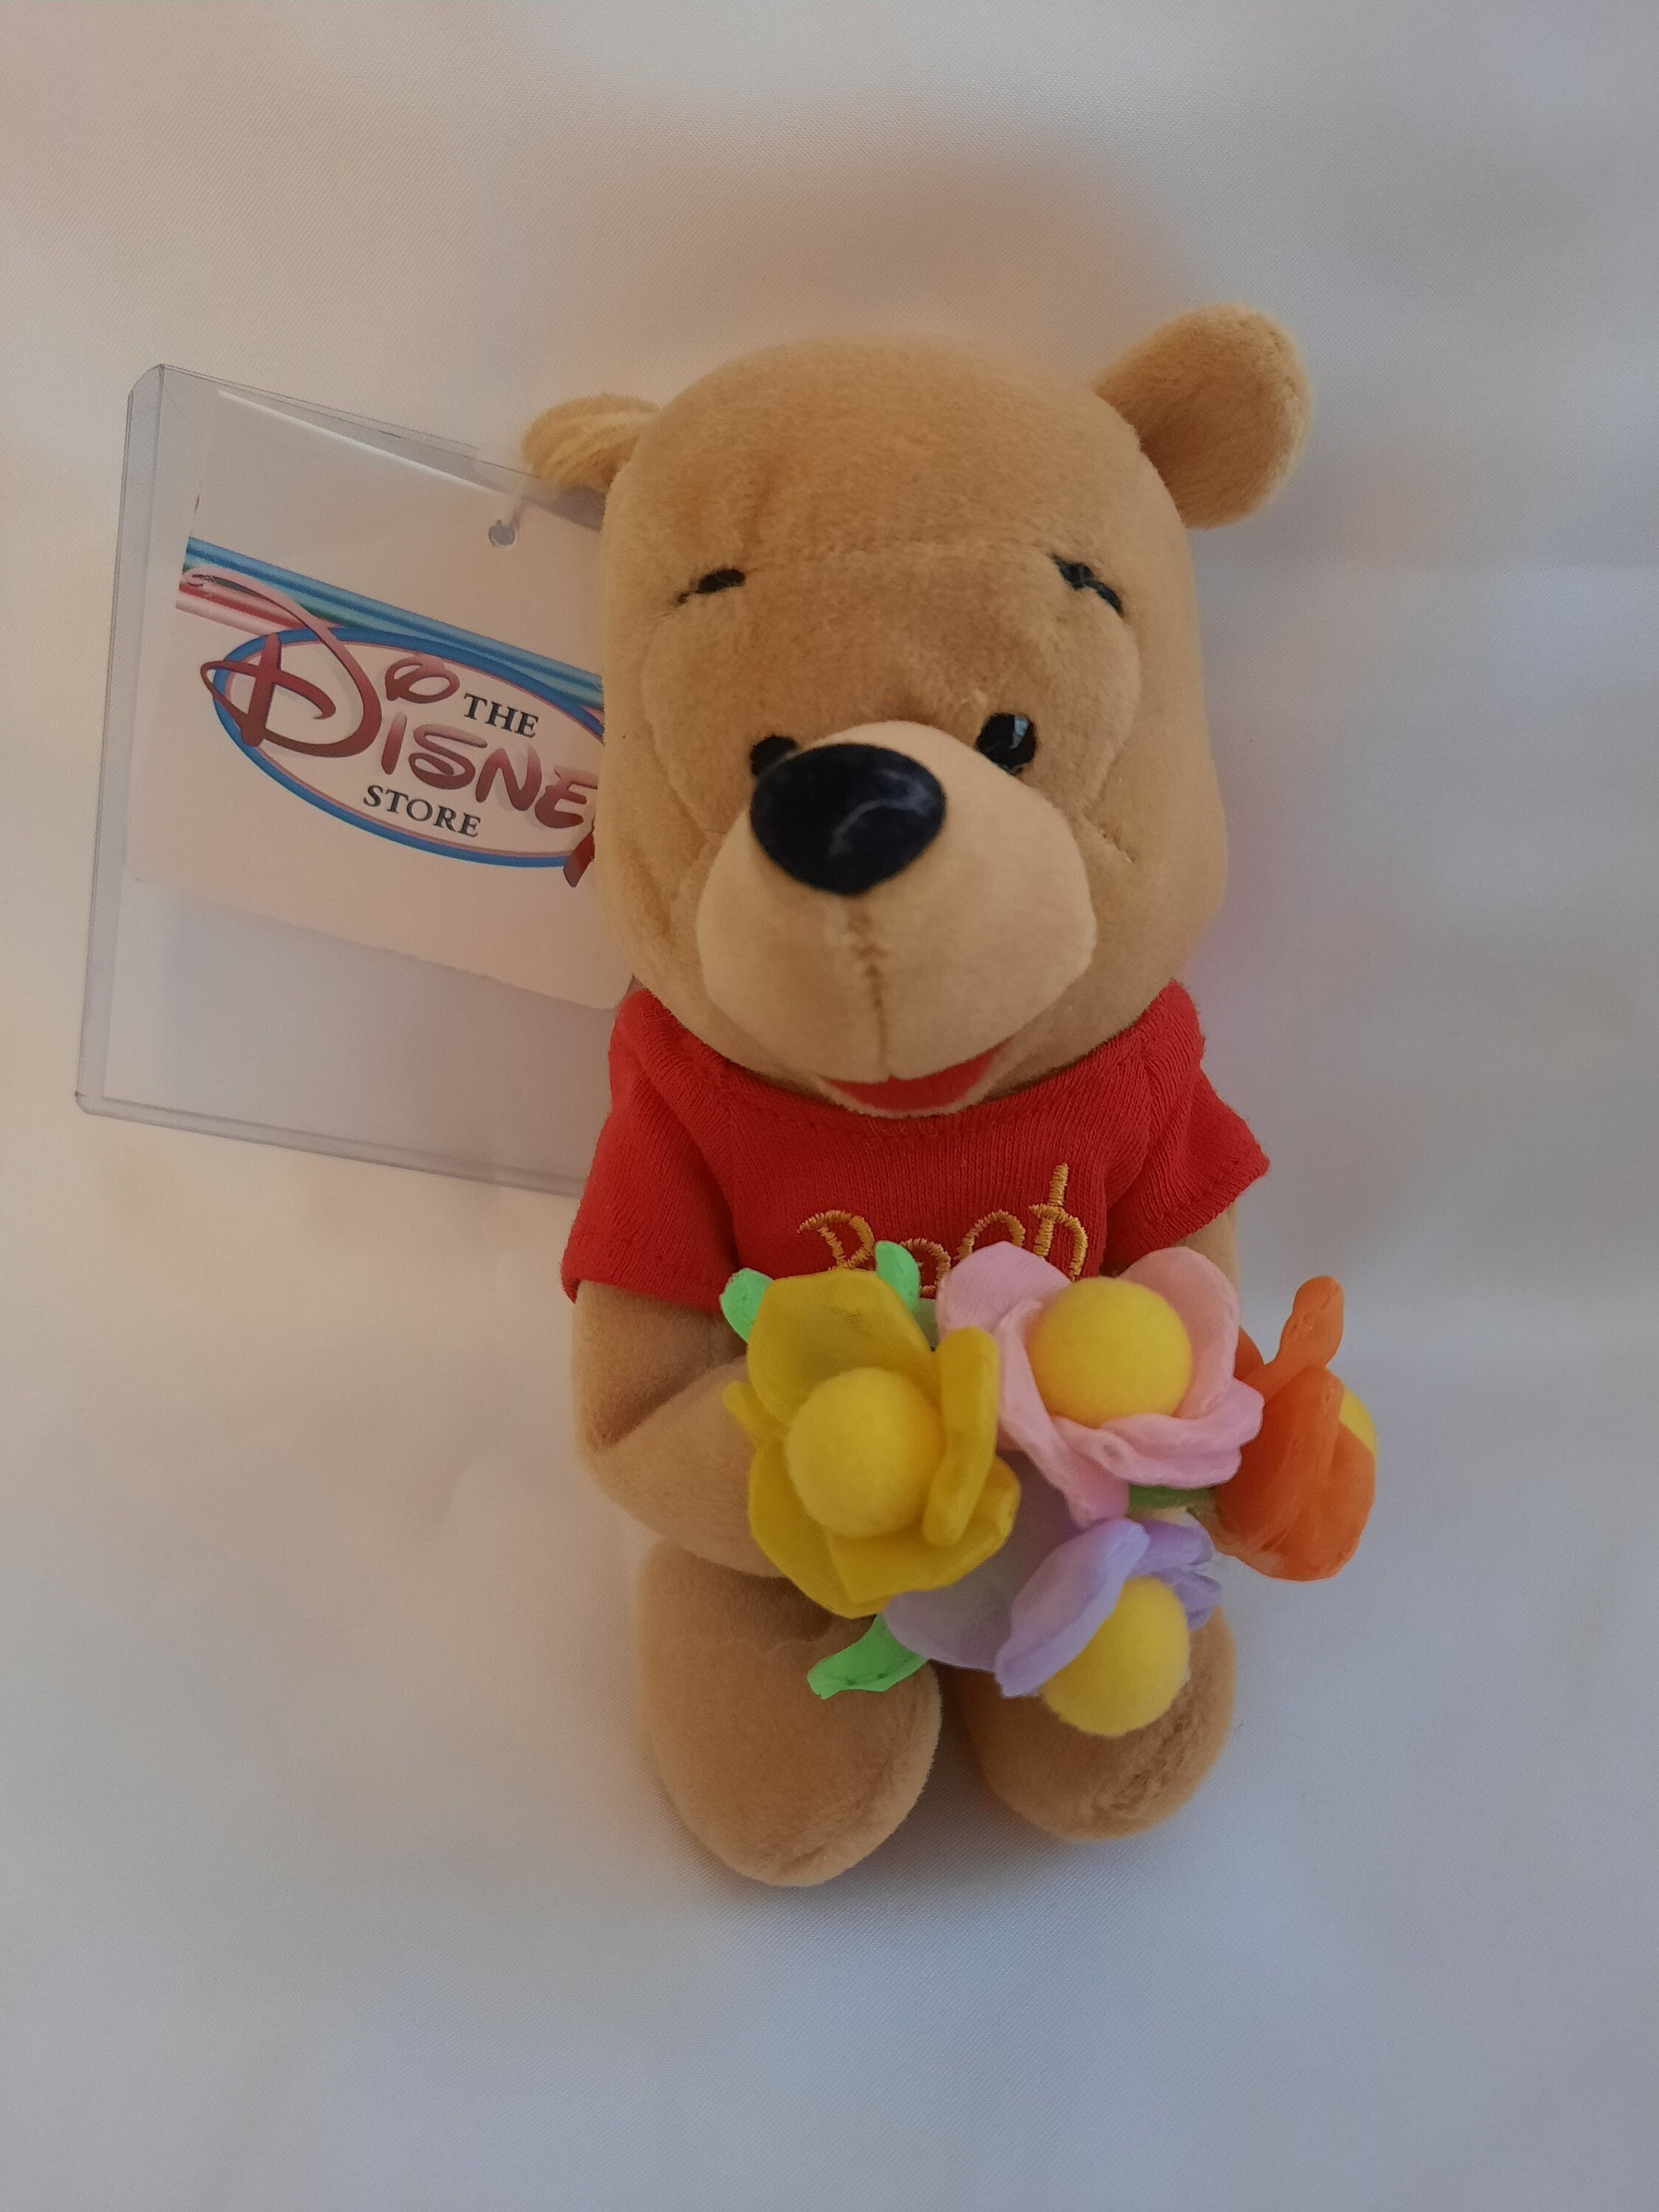 Disney Winnie the Pooh 8" Stuffed  Bean Plush Toy by Dream International 